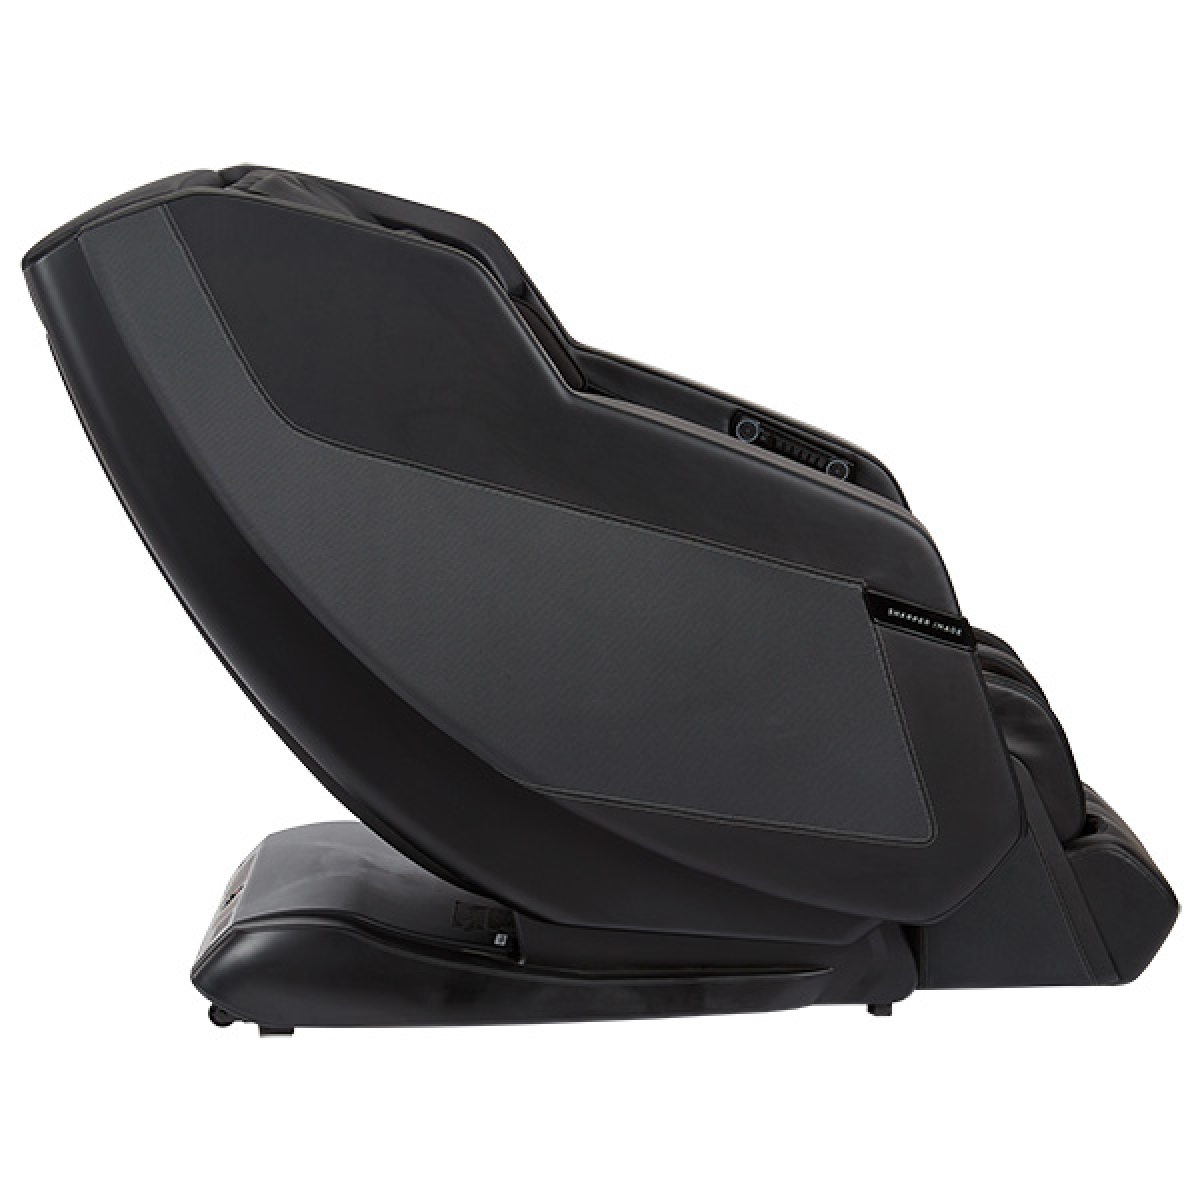 Sharper Image Relieve 3D Zero Gravity Massage Chair in Black - Home Bars USA